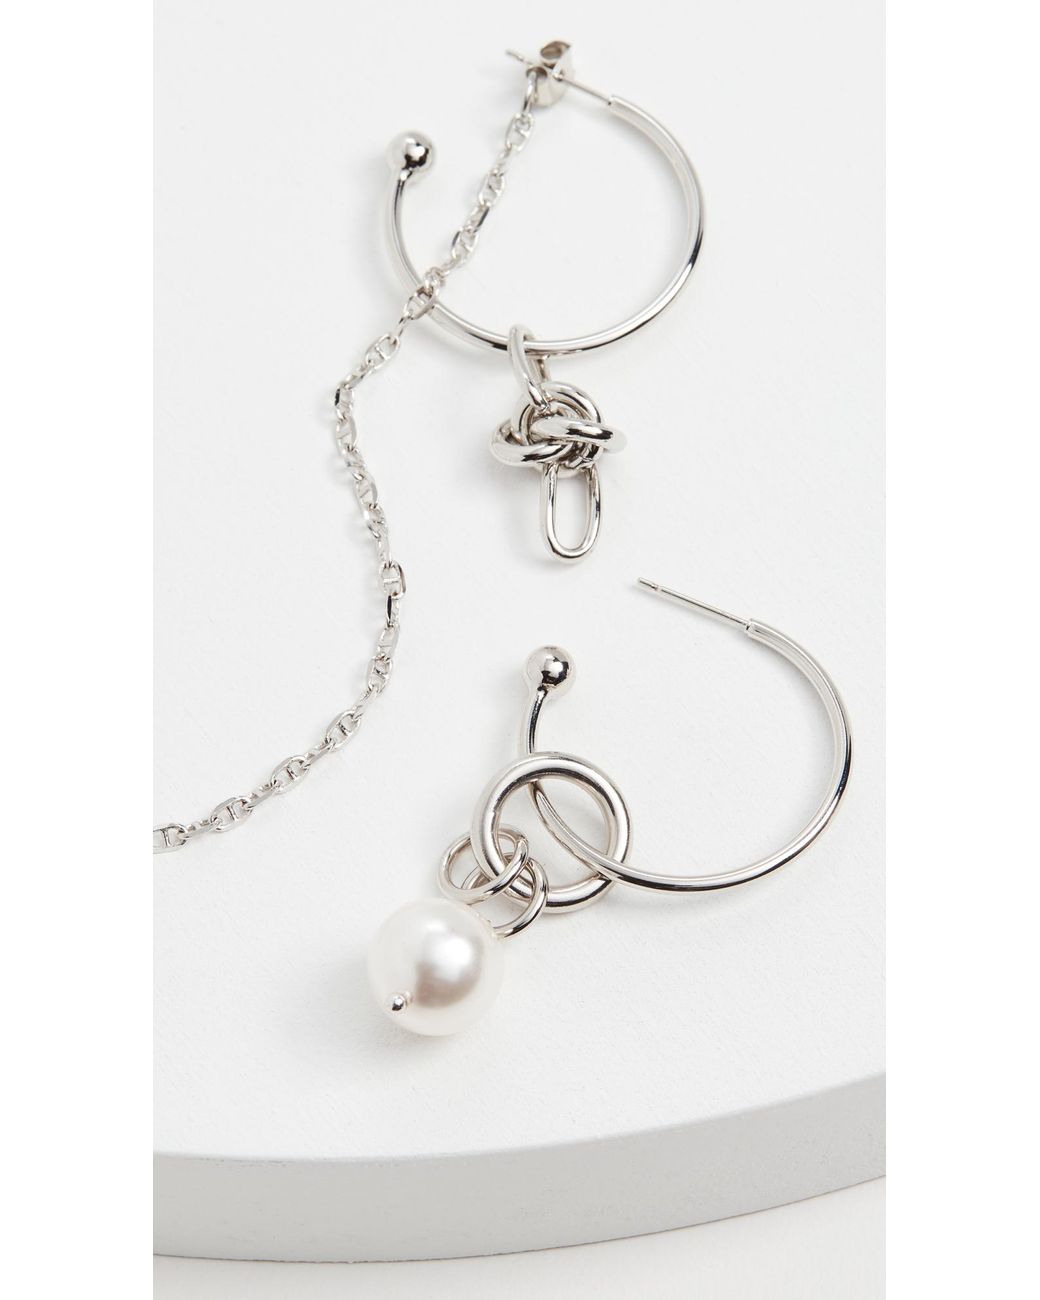 Justine Clenquet Emma Earrings in Silver (Metallic) - Lyst